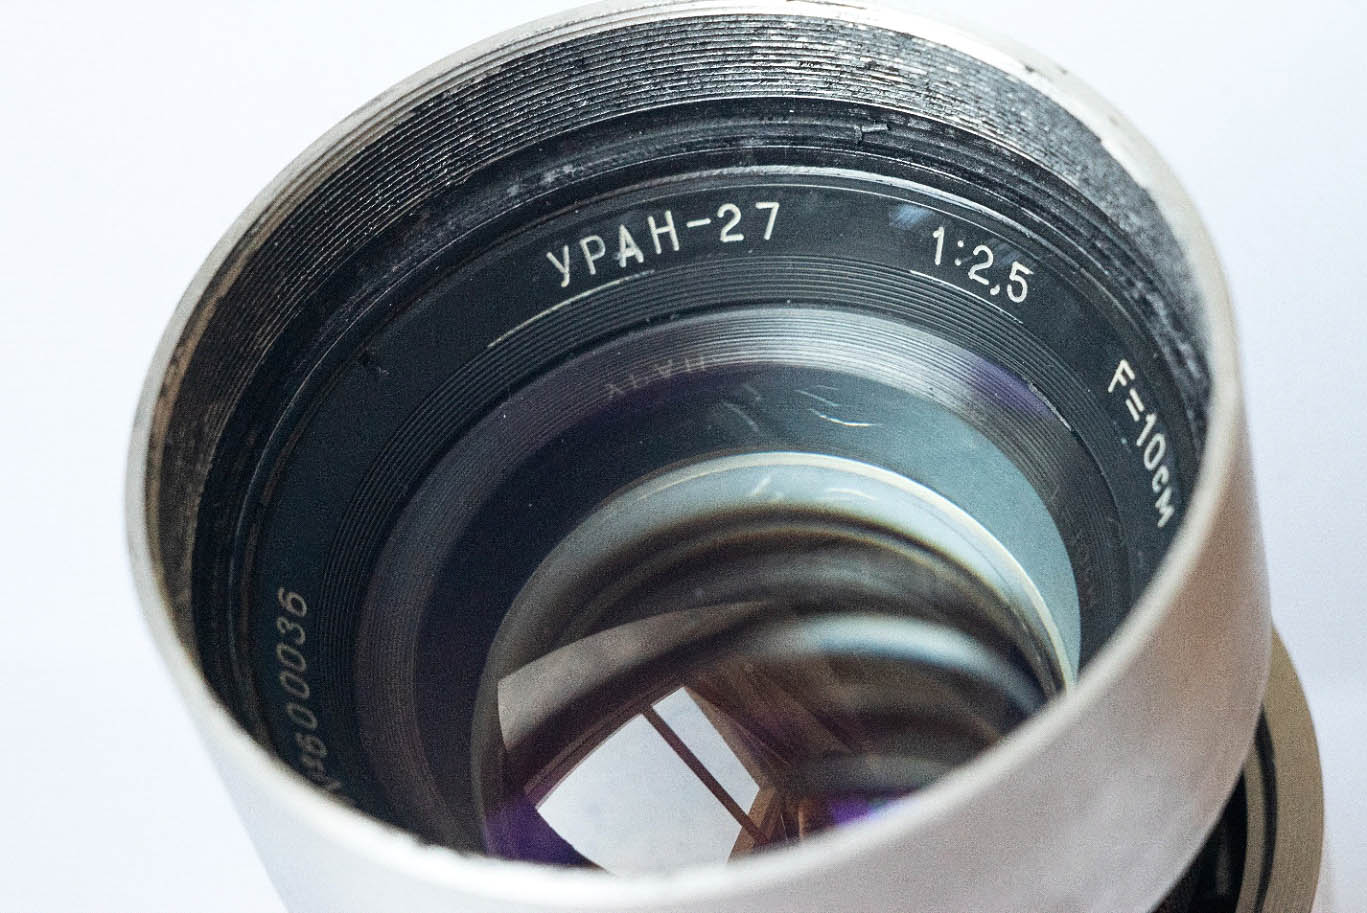 Adapted lens Uran-27.